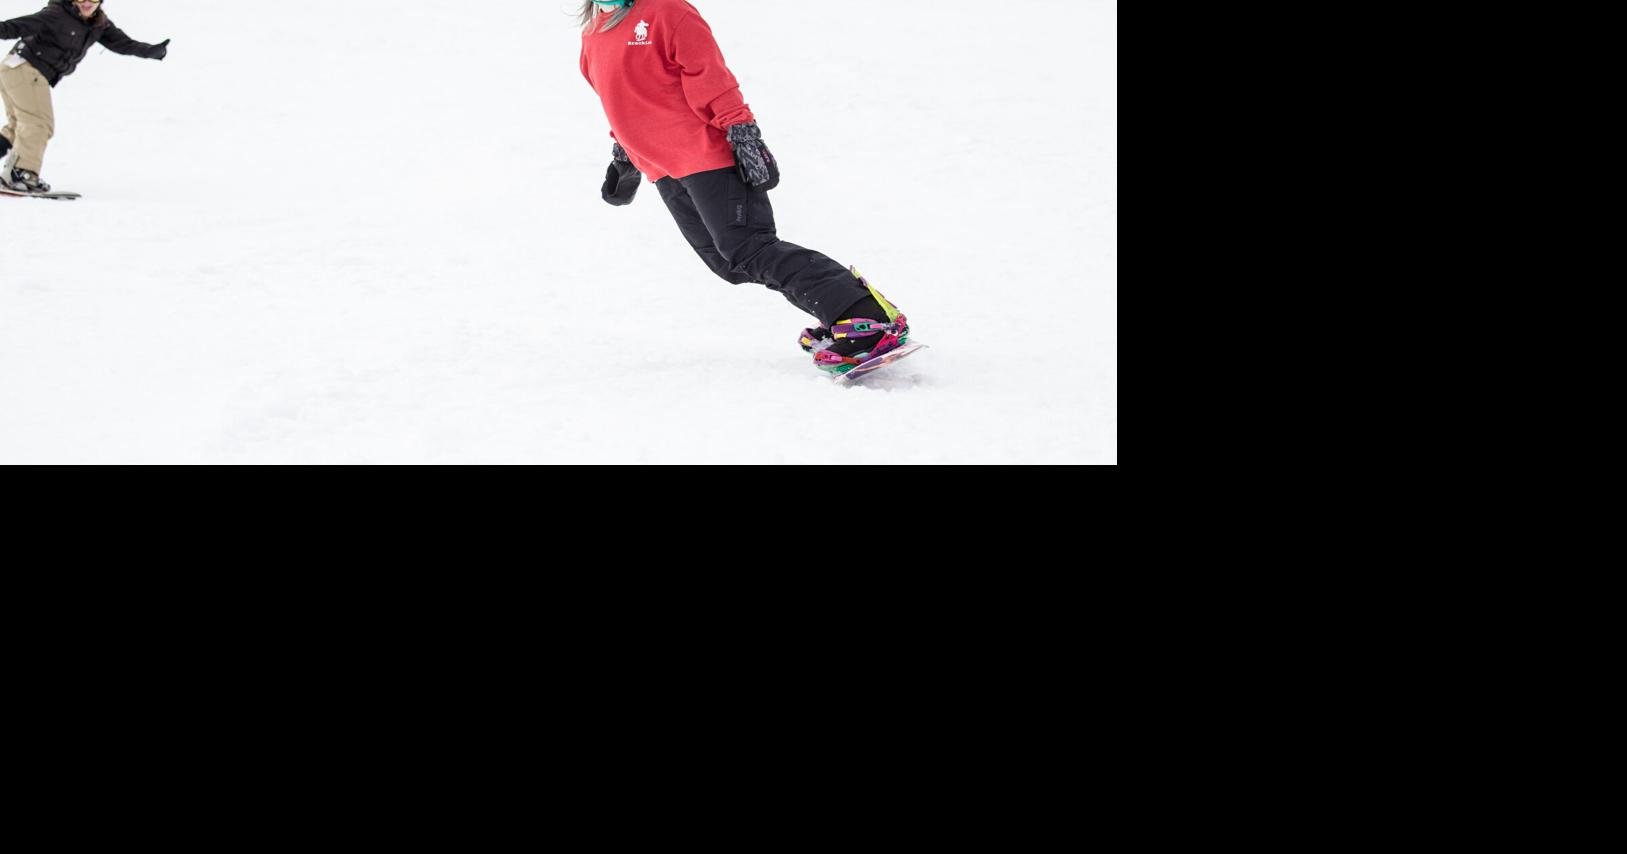 diefstal plus ik ben gelukkig Girls Go Shred: Snowboarders Support Each Other On the Slopes | Features |  wataugademocrat.com